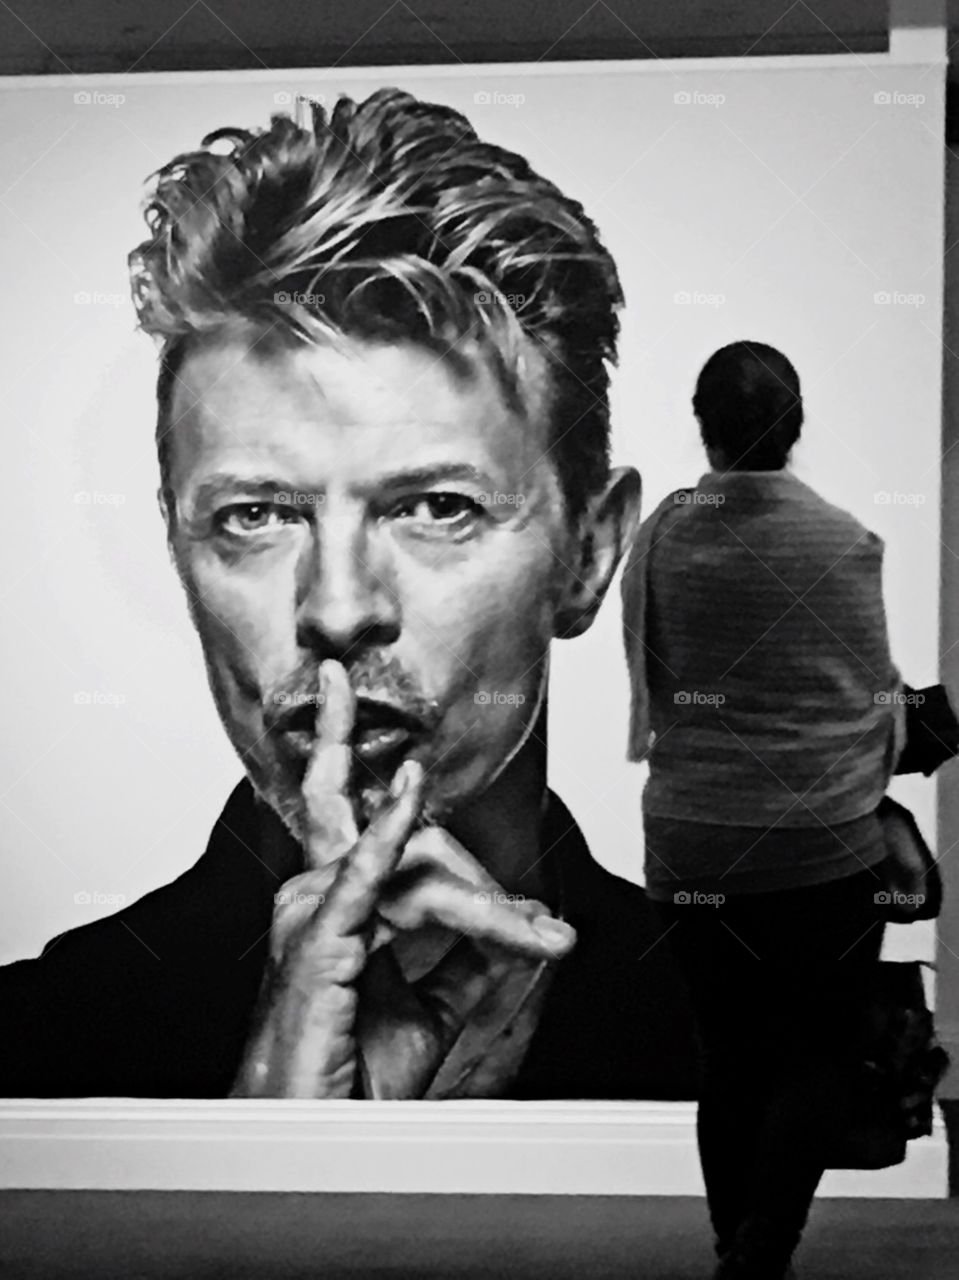 Admiring Bowie